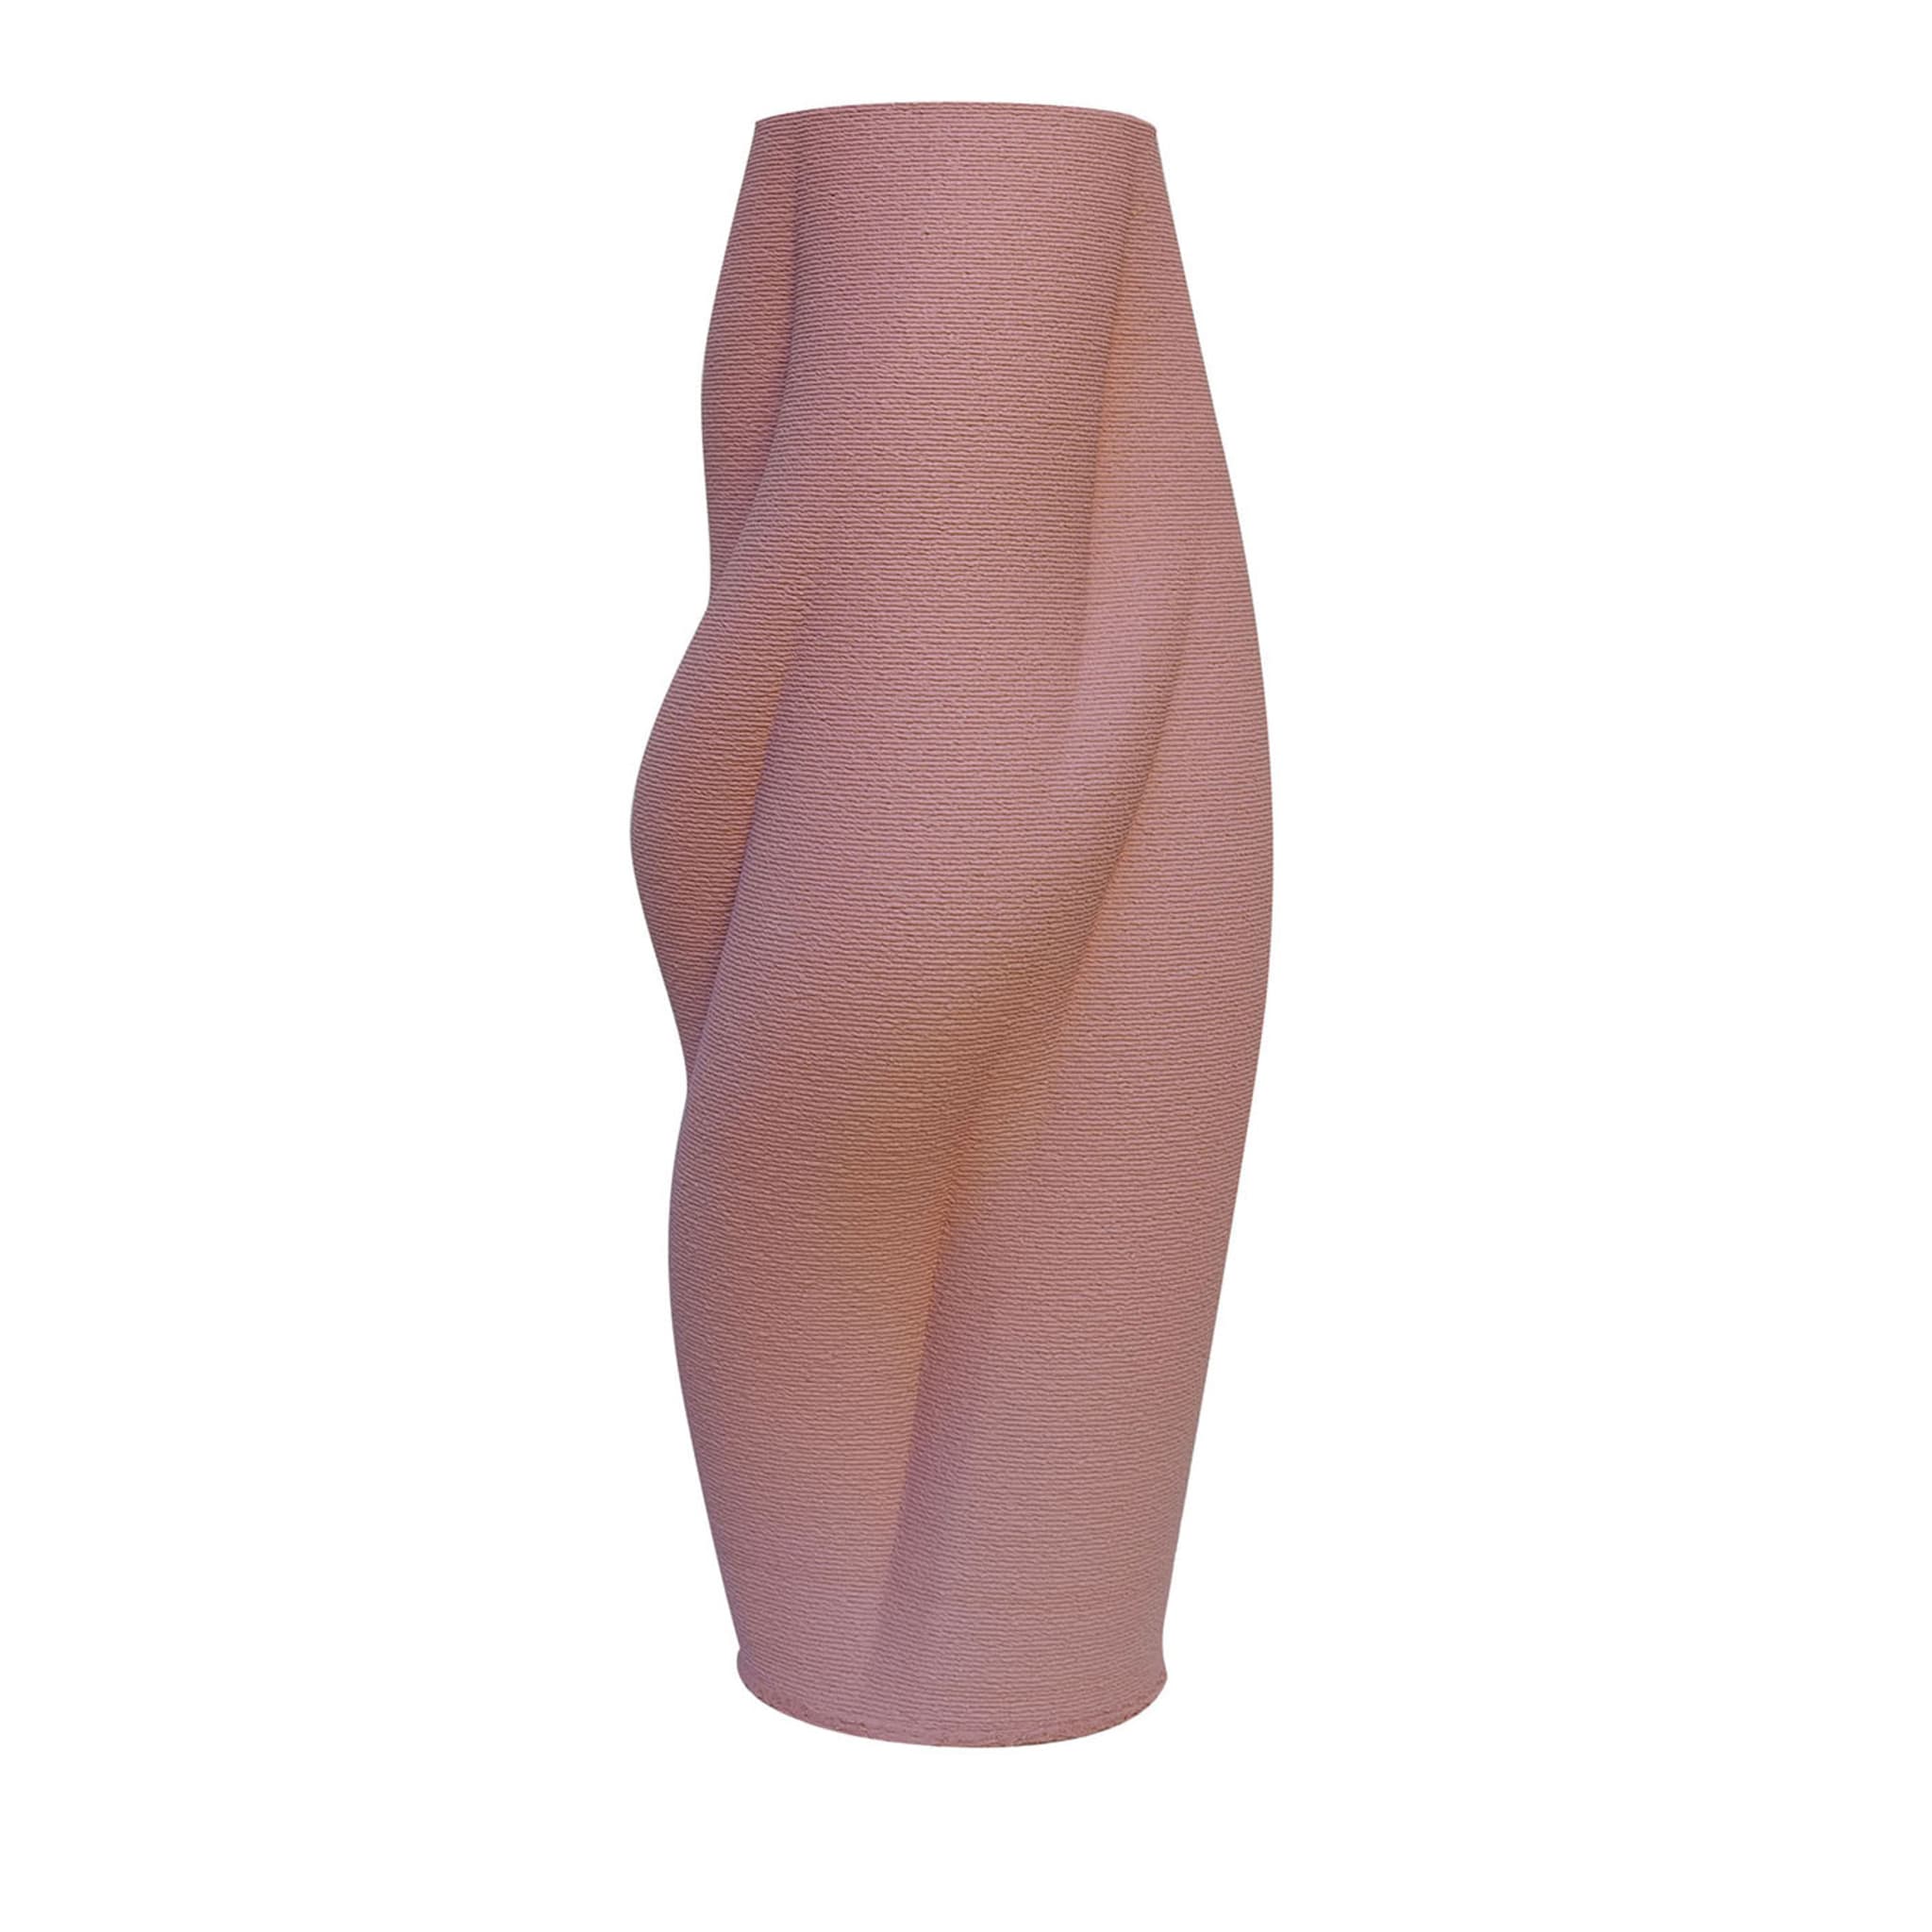 Vaso femminile in ceramica rosa - Vista principale